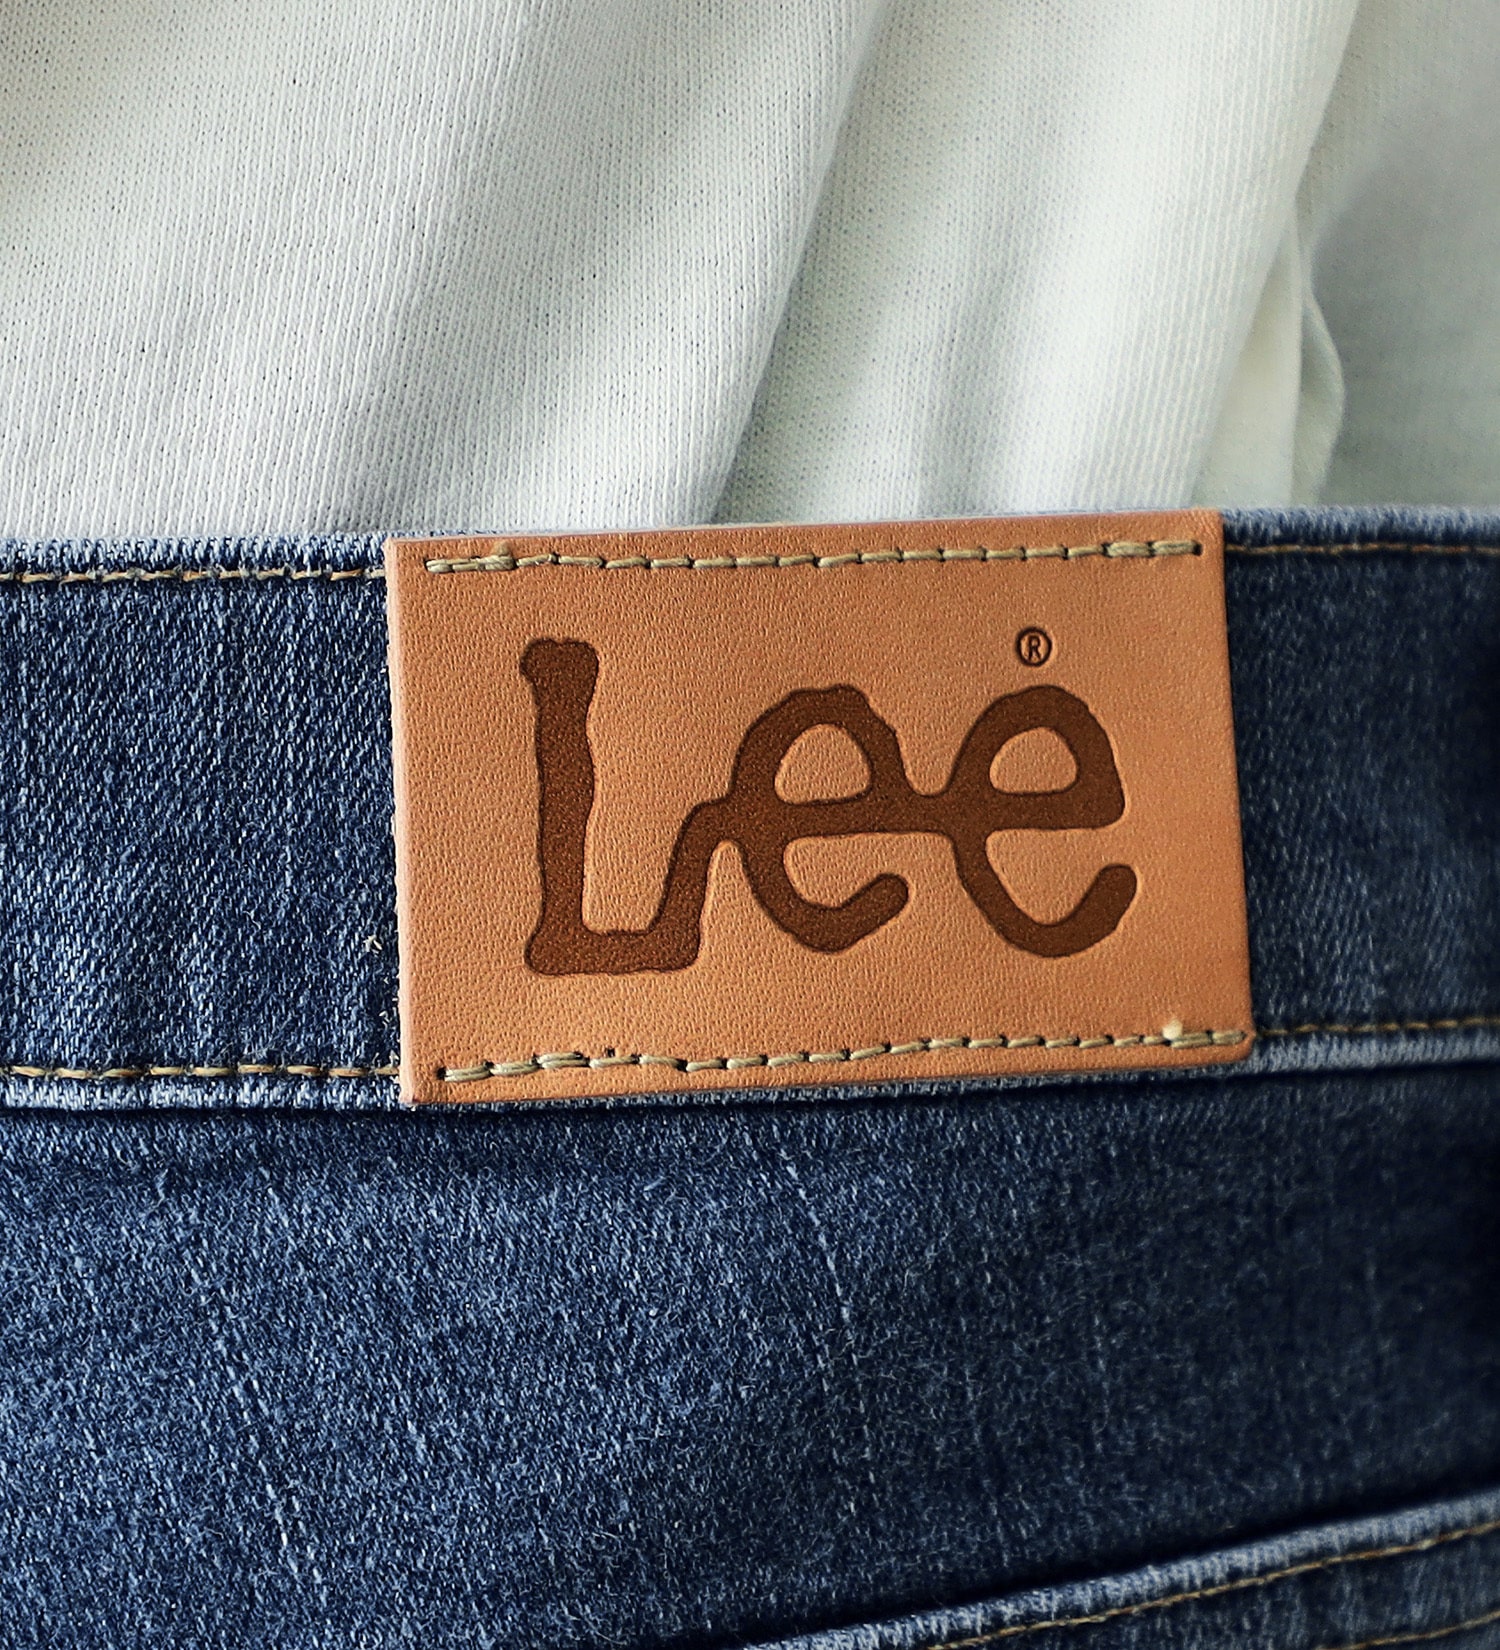 Lee(リー)の【試着対象】【超快適ストレッチ】すっきり細身スキニーパンツ|パンツ/デニムパンツ/メンズ|中色ブルー